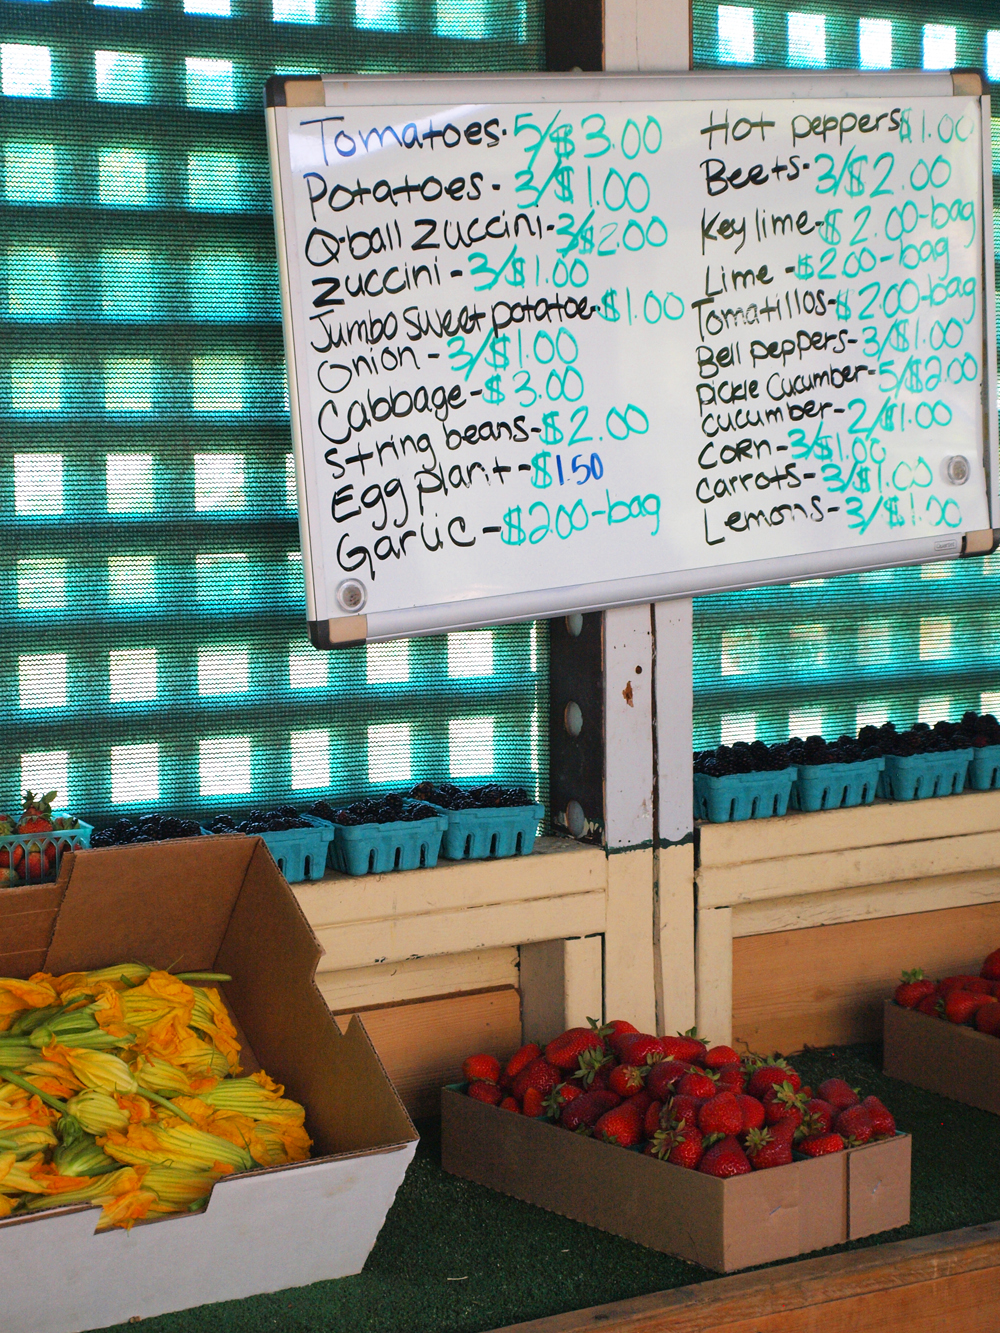 Farm stand prices, Napa Valley, California